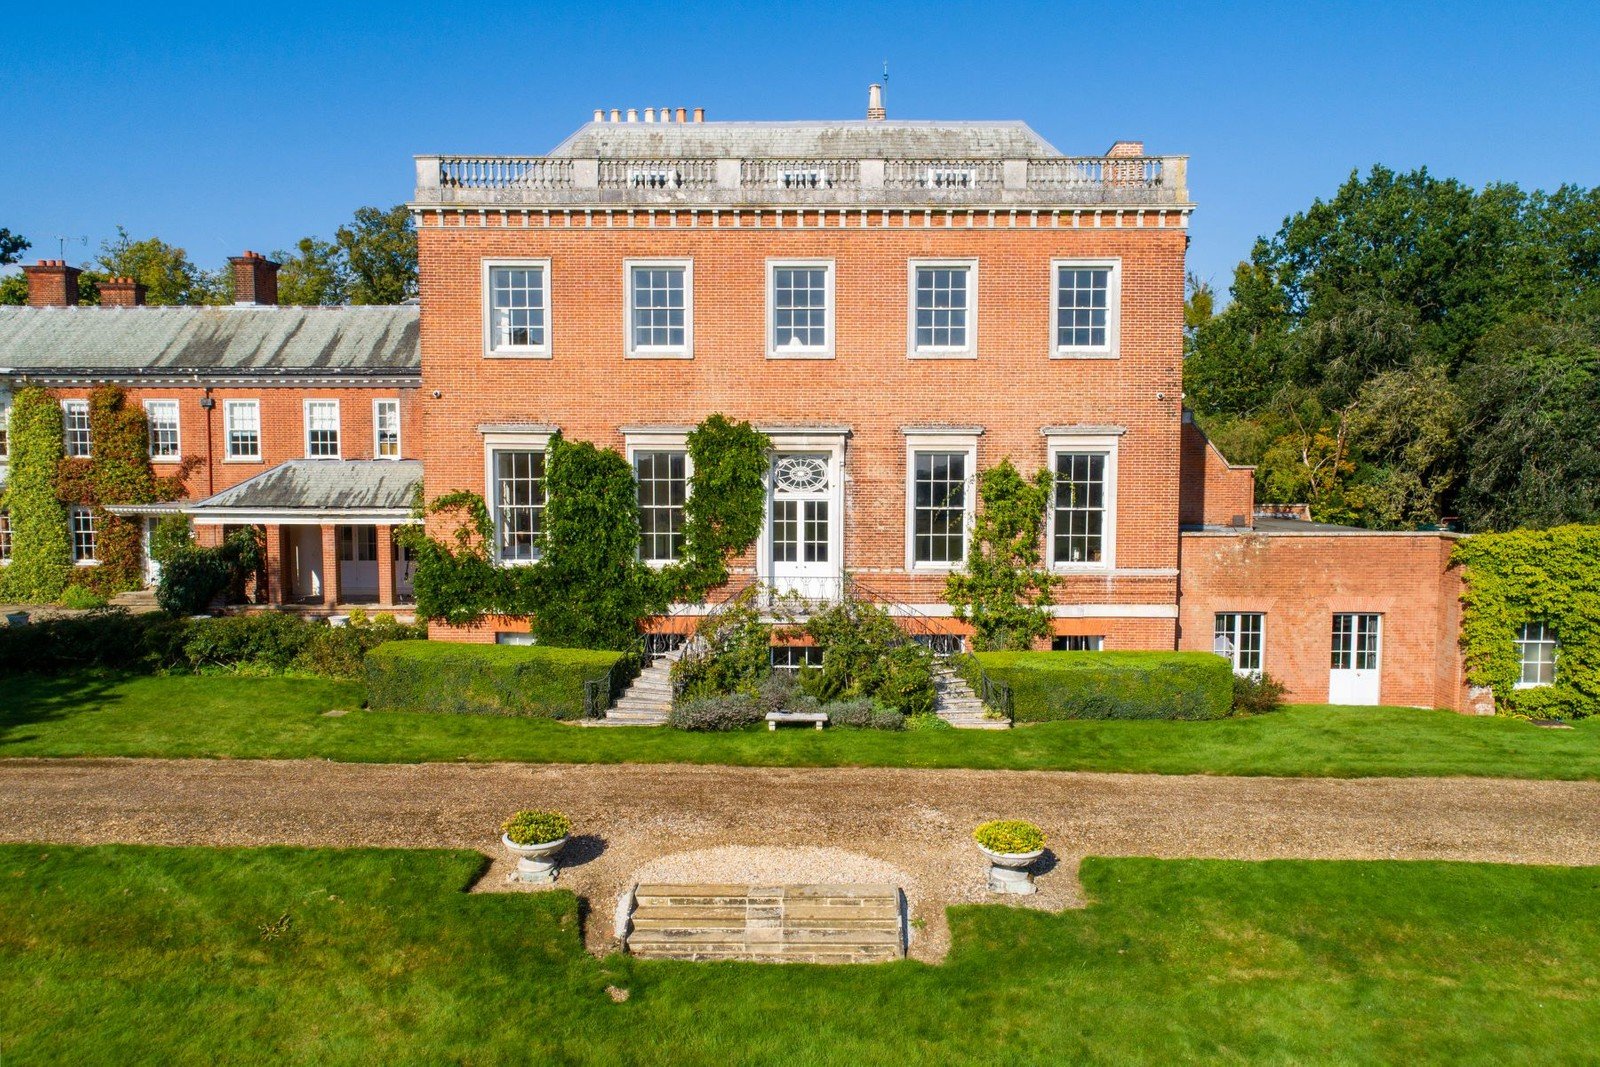 Francis York Elegant Red Brick Mansion in the Hertfordshire Countryside 1.jpeg